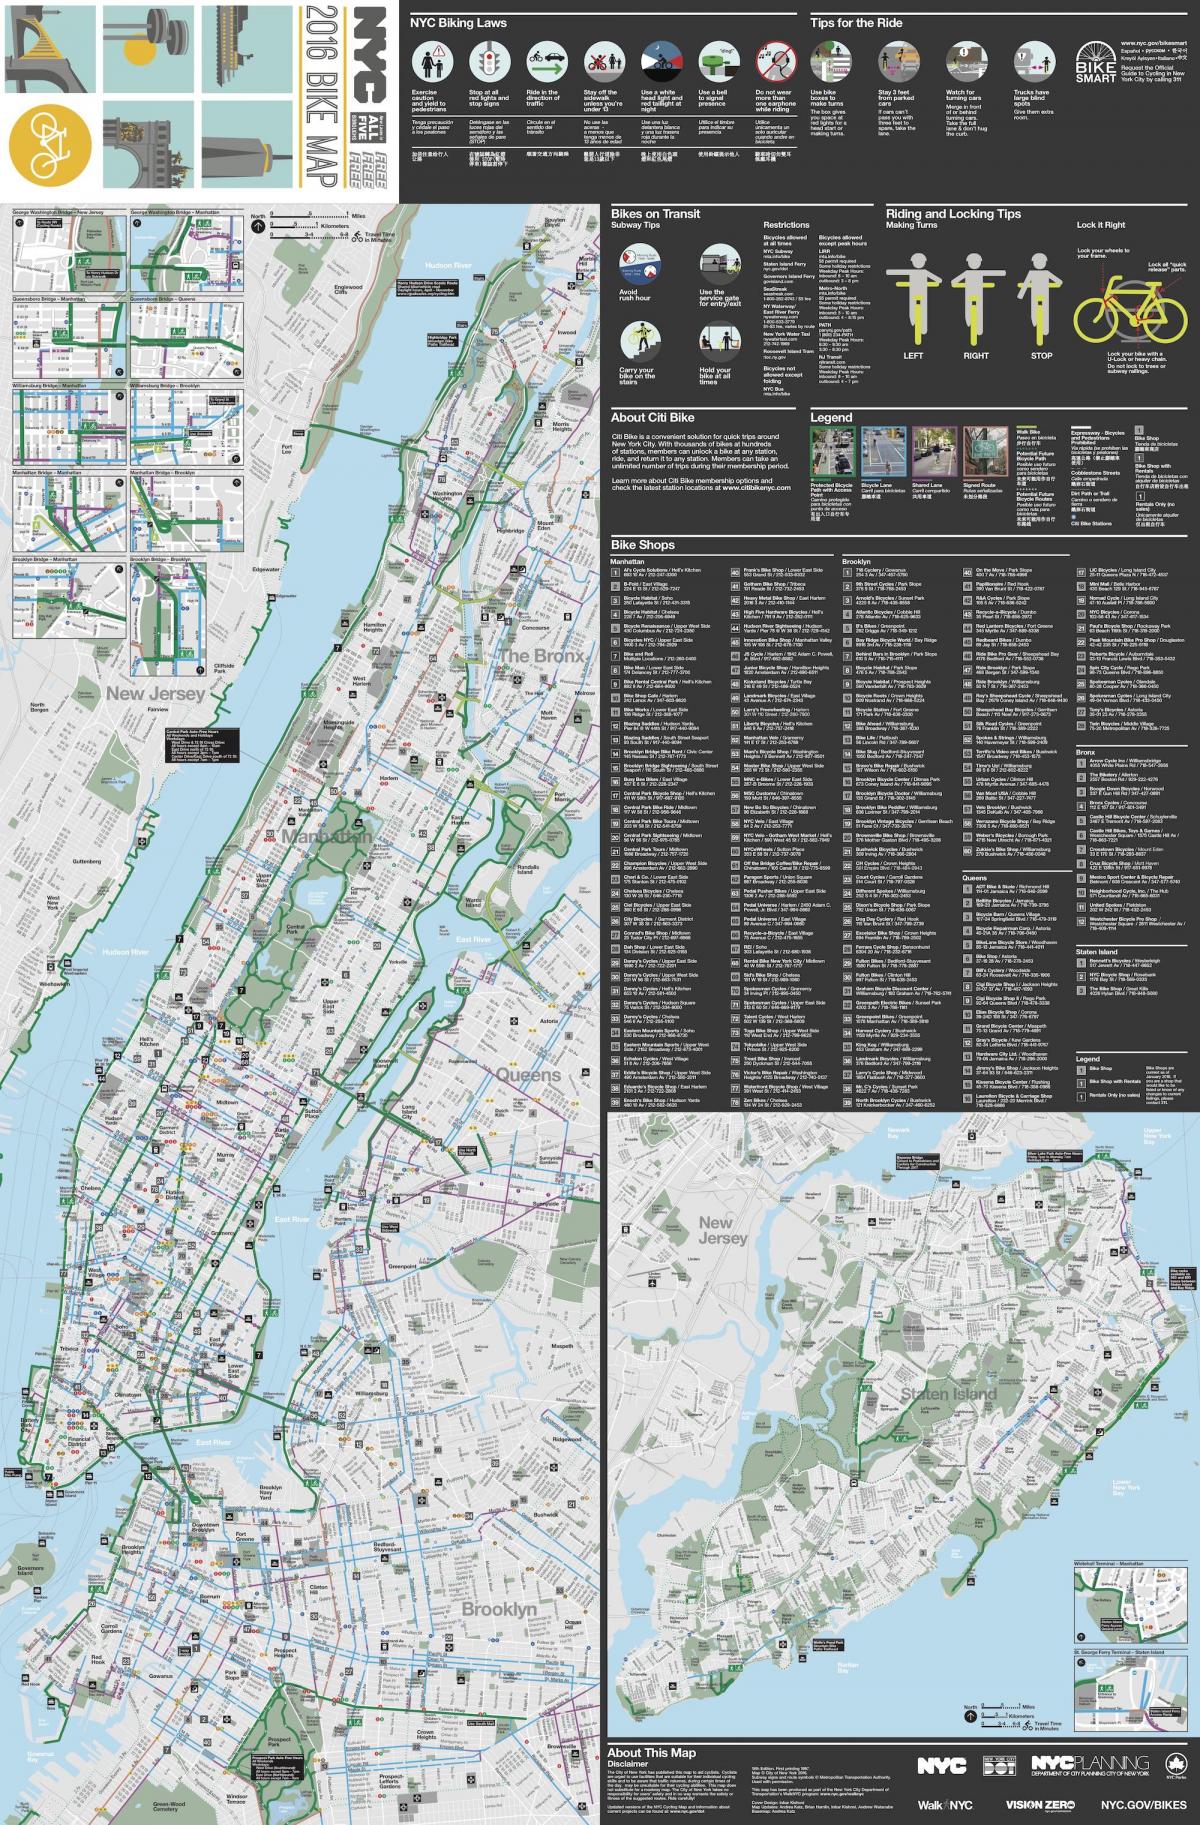 Manhattan bisiklet lane göster